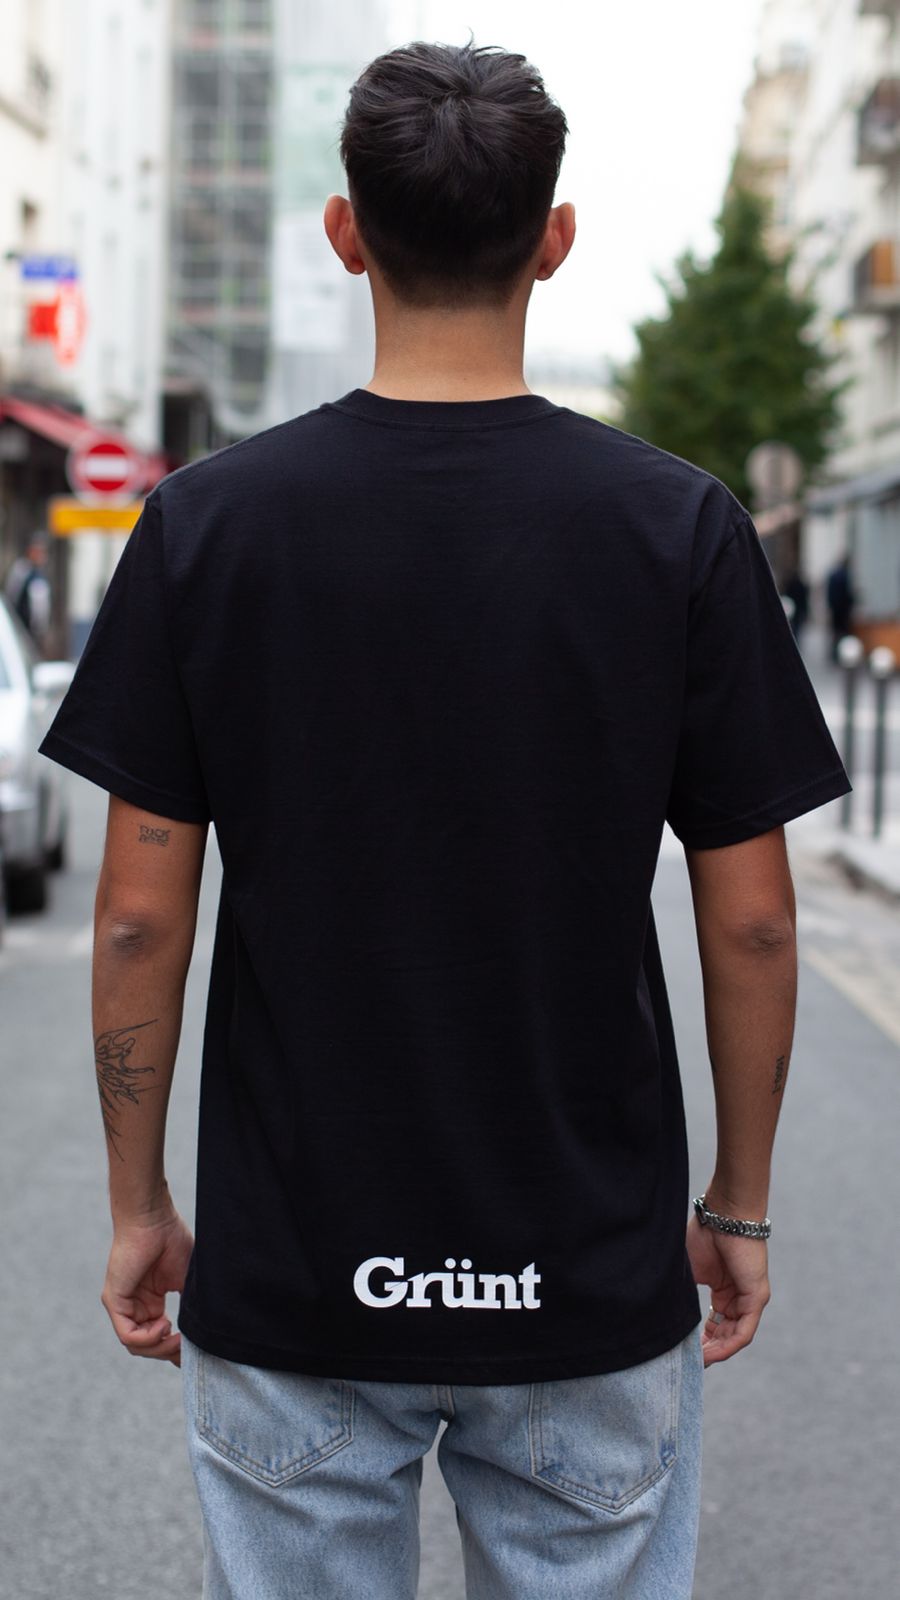 T-shirt Grünt noir